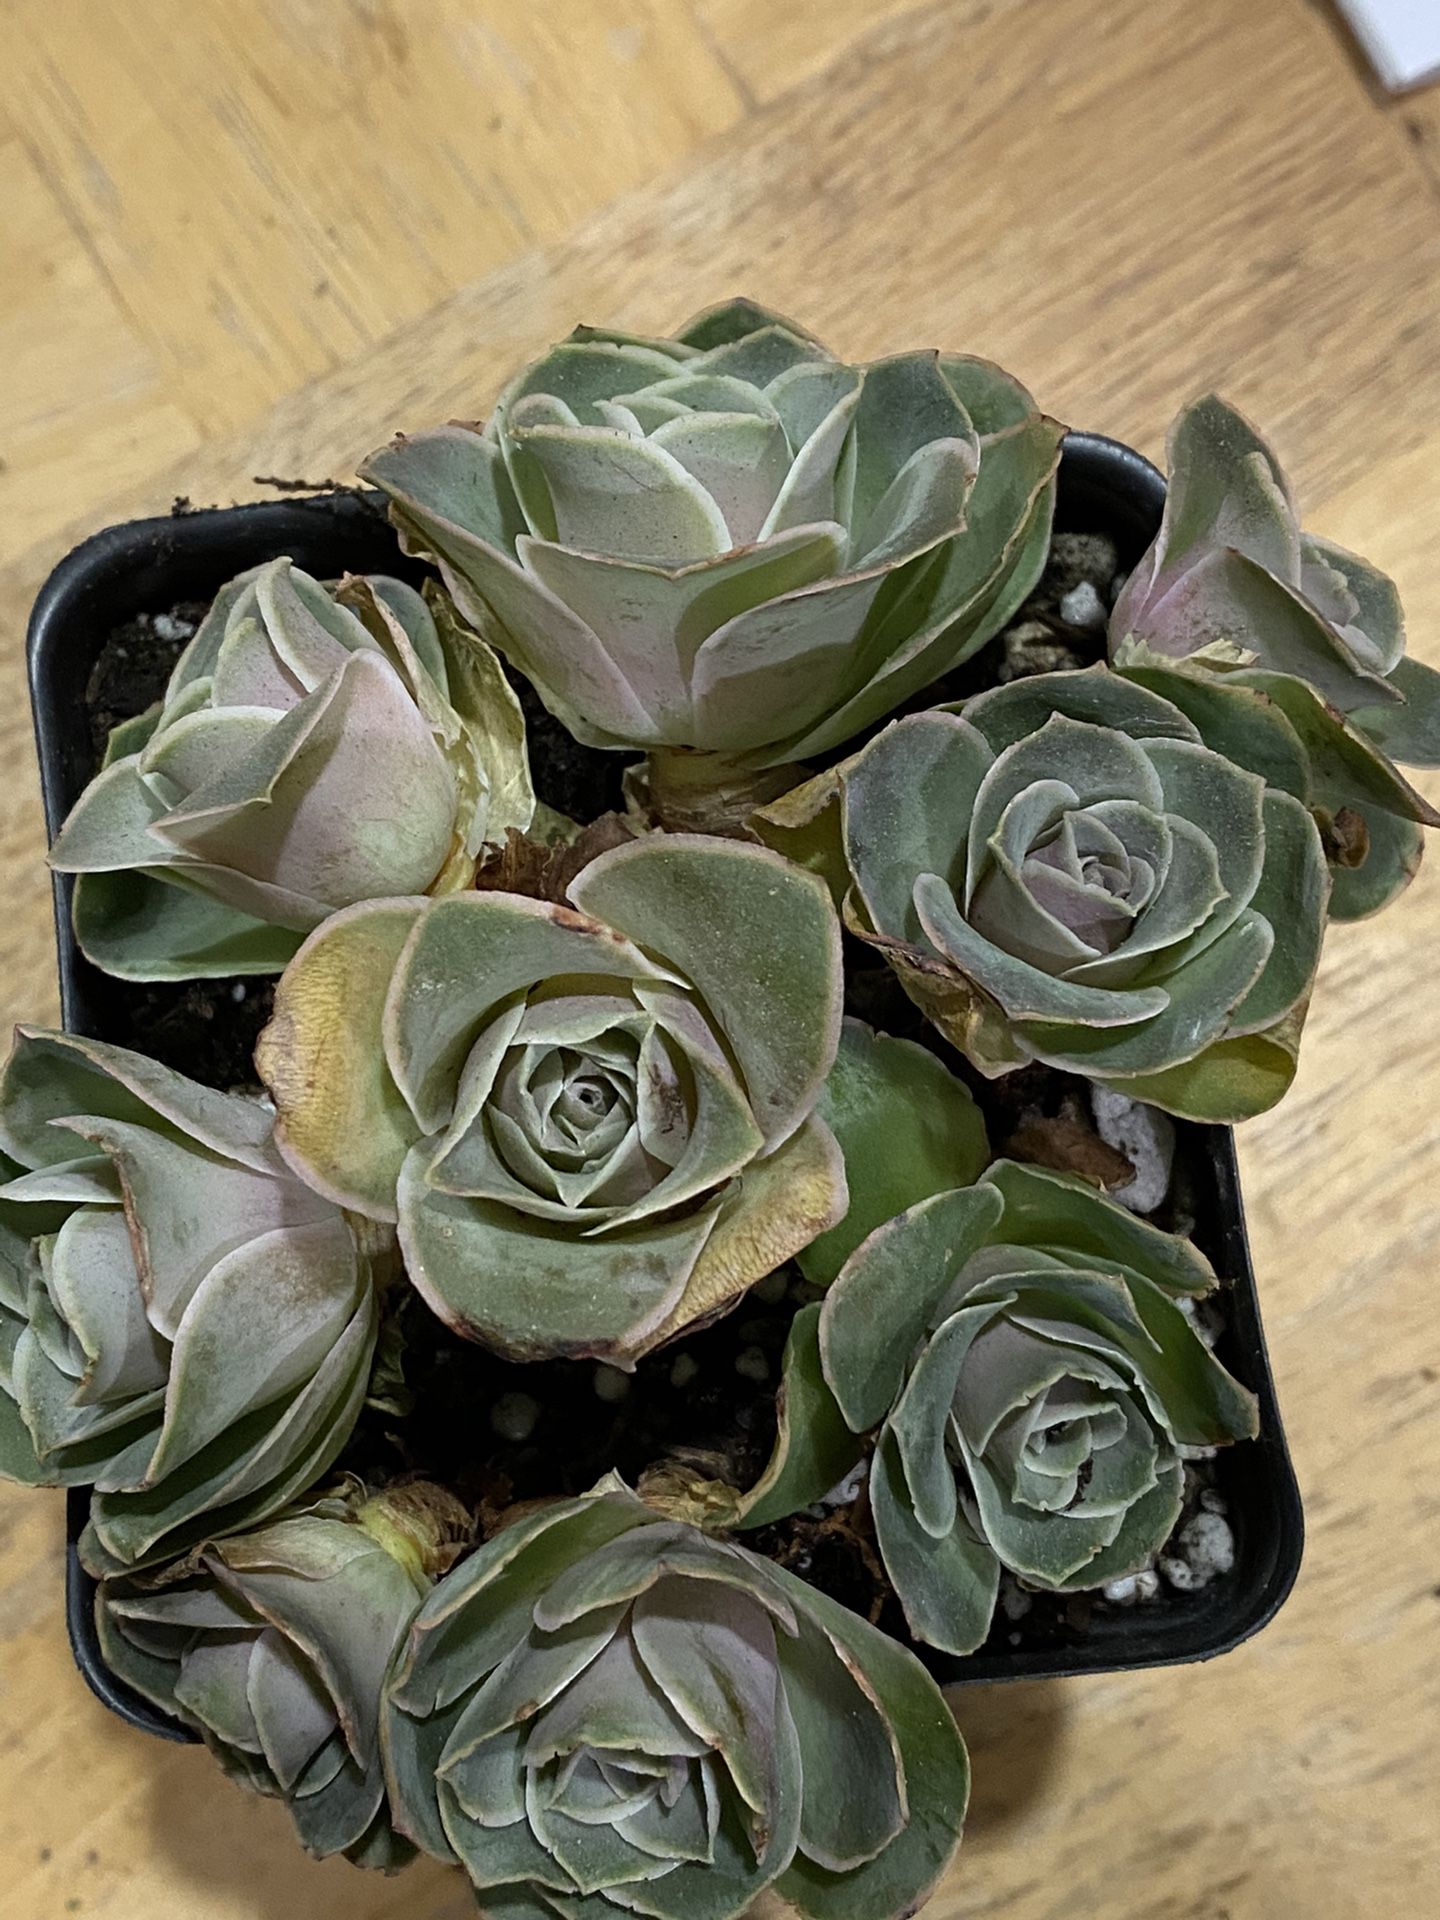 1 Hierro clusters greenovia succulent in 4” pot